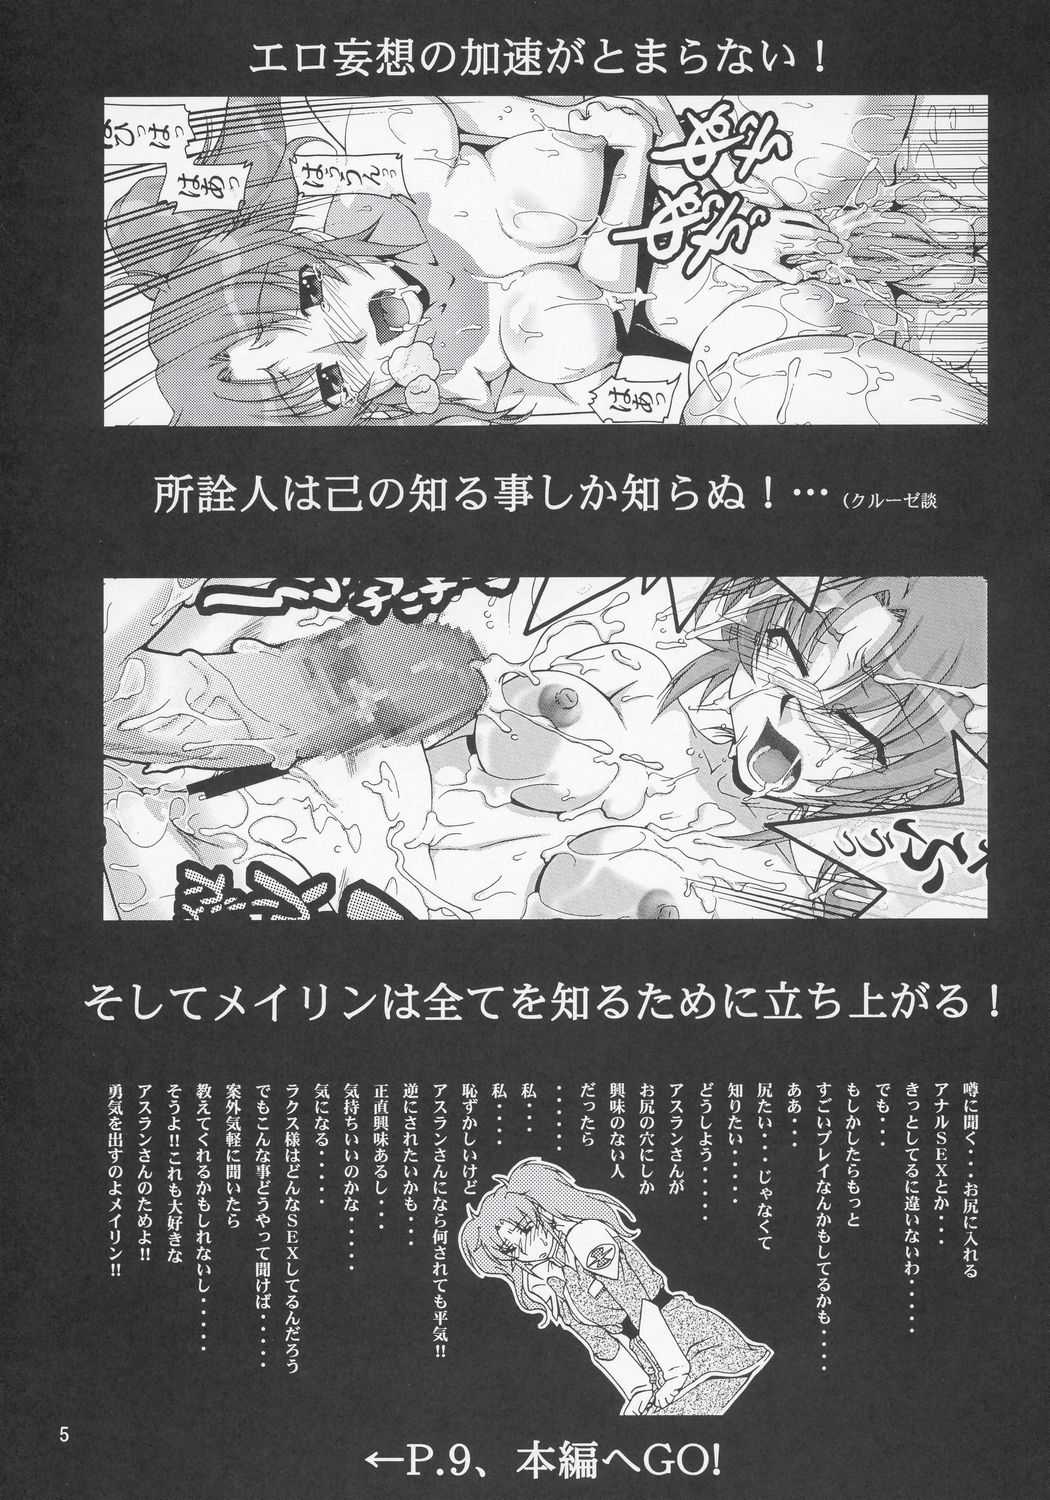 [Gold Rush] Thank You Lacus! END (Gundam Seed Destiny) (English) {Decensored} 